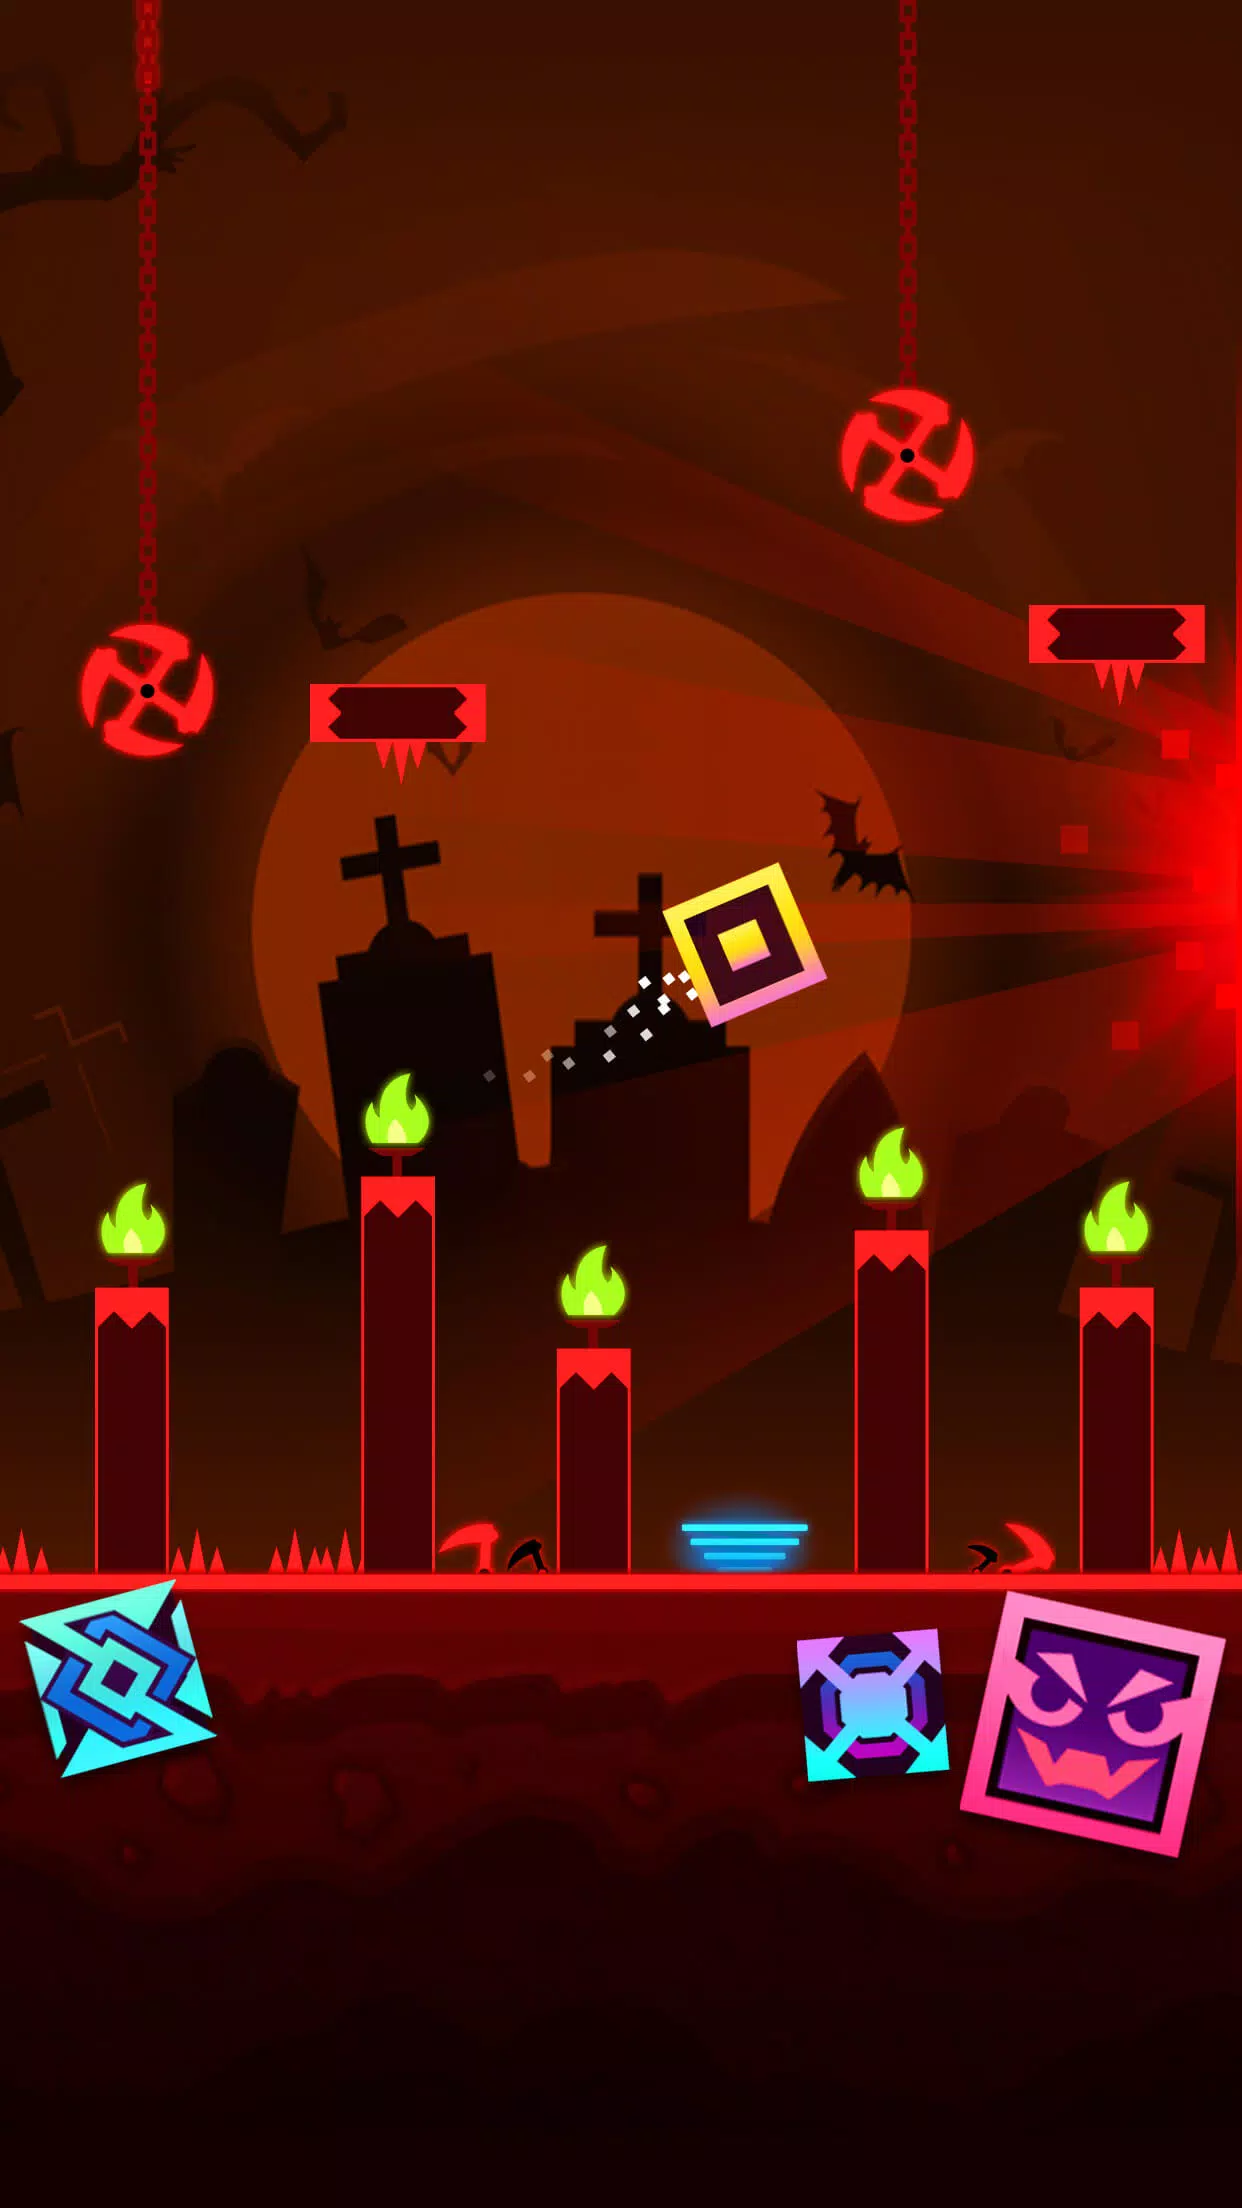 Block Dash: Geometry Jump APK (Android Game) - Free Download